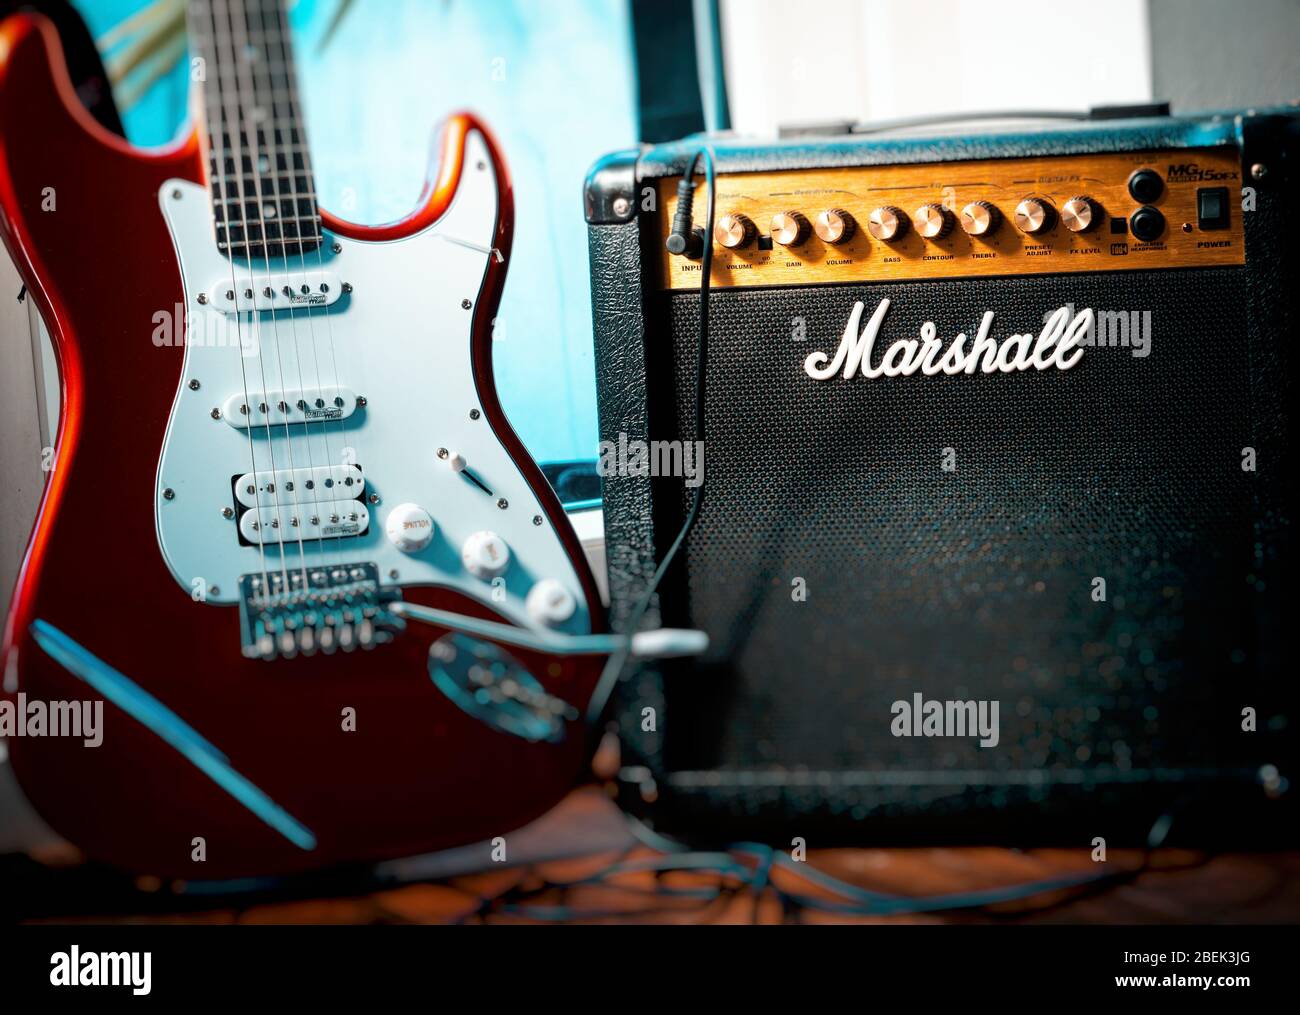 Electric Guitar and Marshall Amplifier, Marshall Amplification fu fondata da Jim Marshall a Londra intorno al 1962. Foto Stock